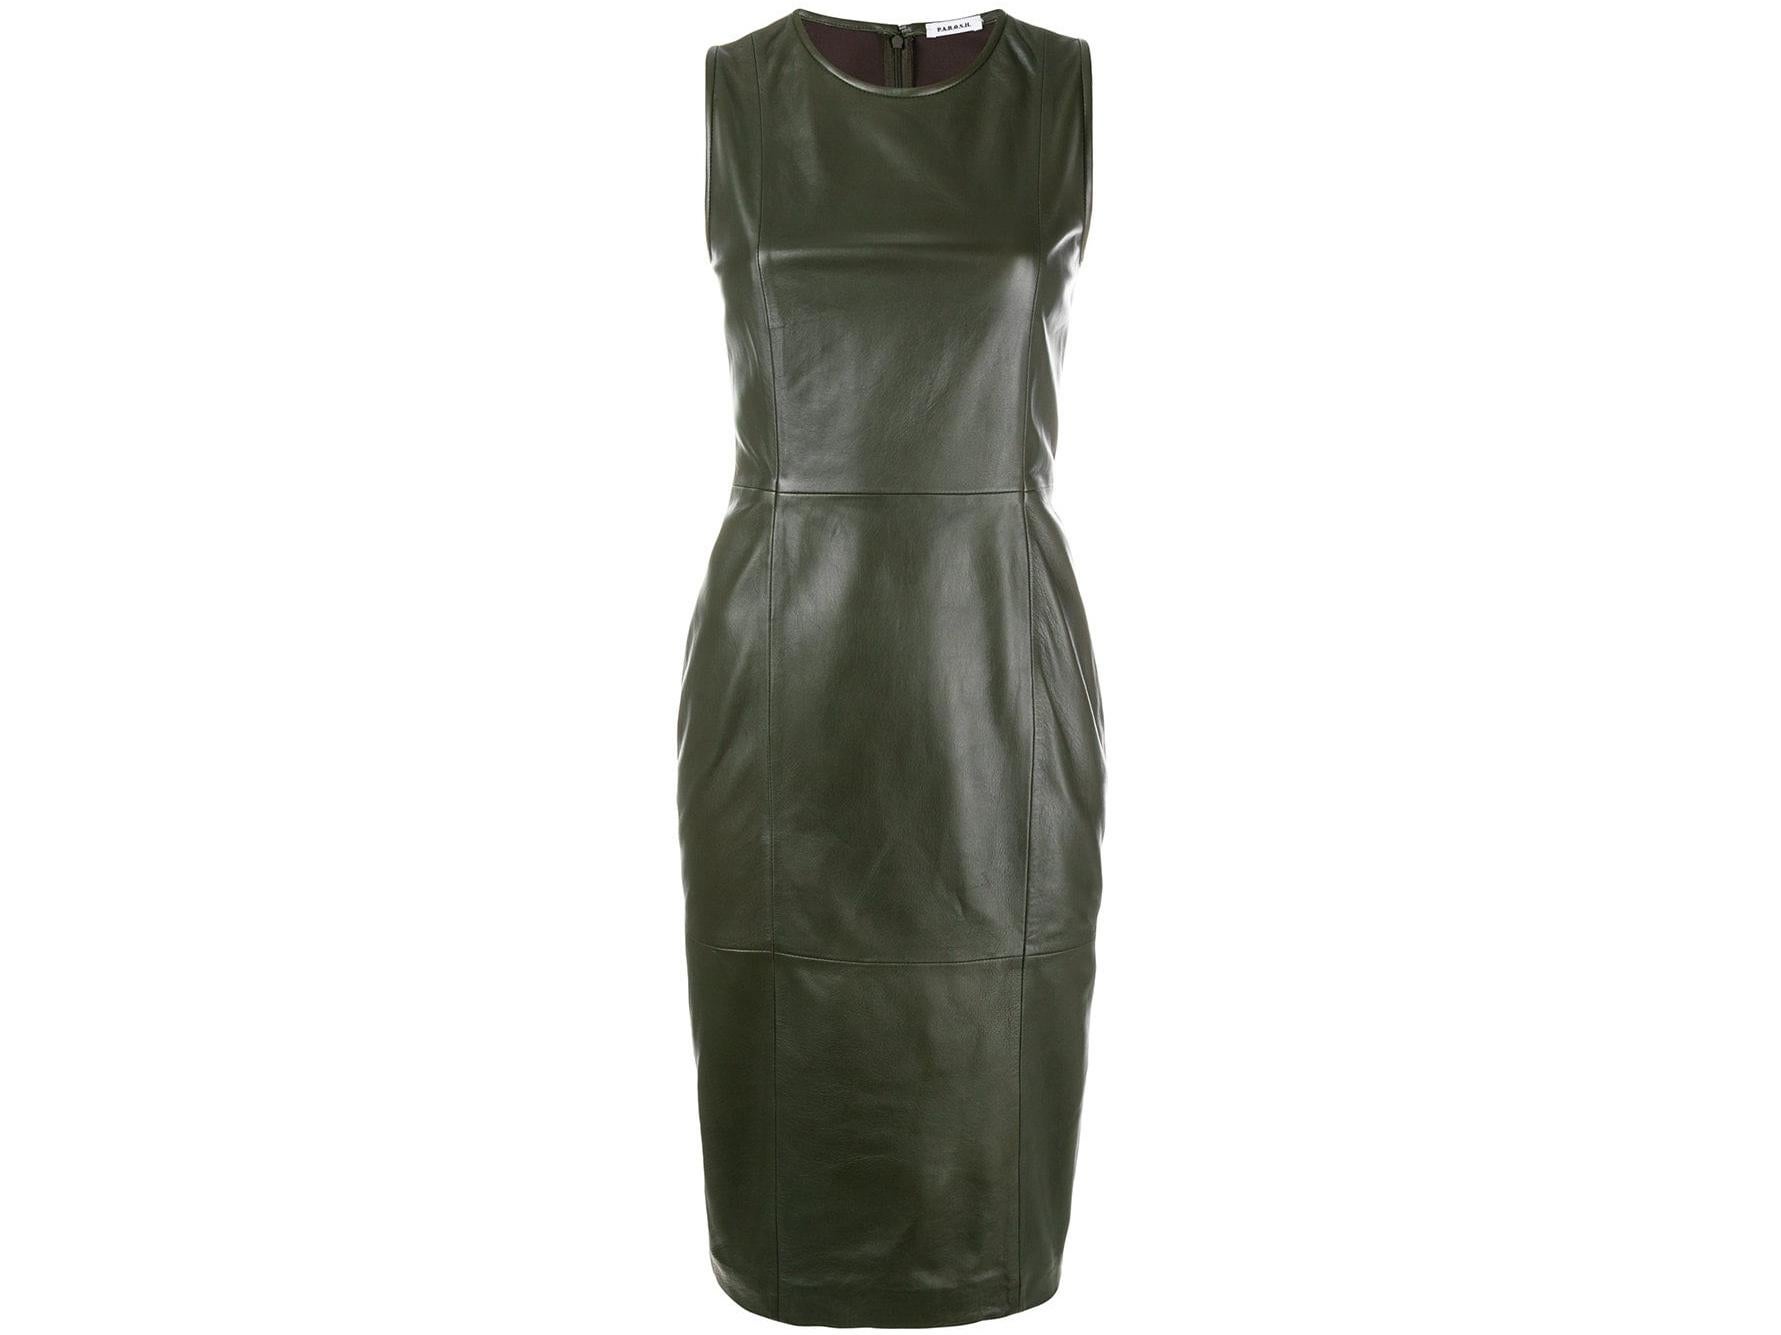 P.A.R.O.S.H. Leather Panel Dress, £332, Farfetch